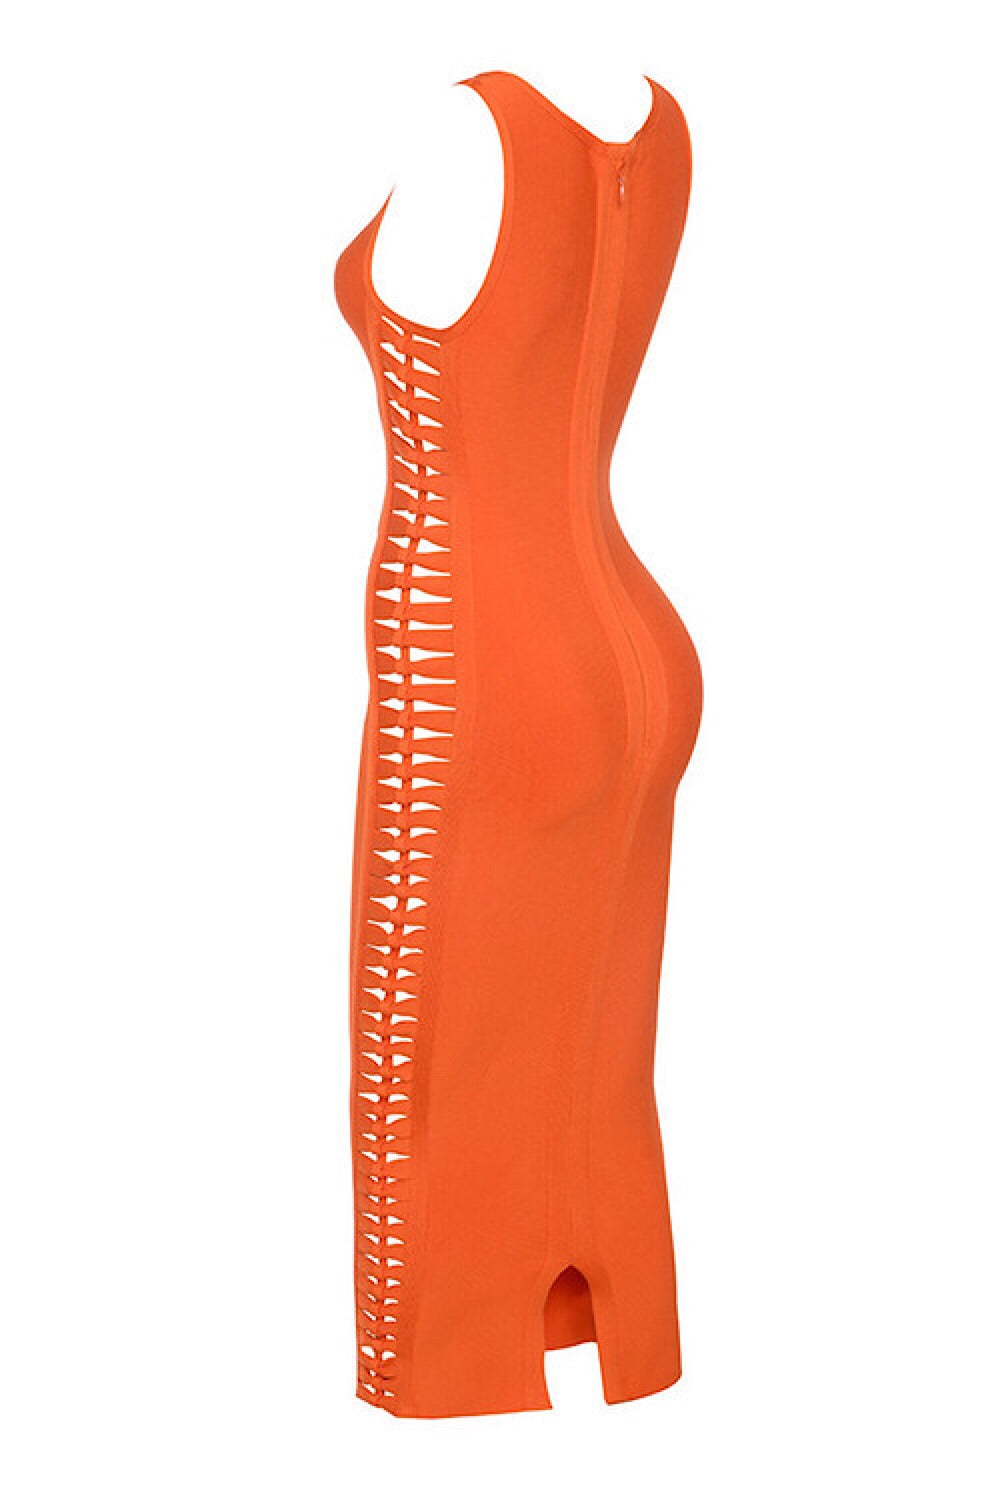 Kira Side Knot Orange Bandage Dress